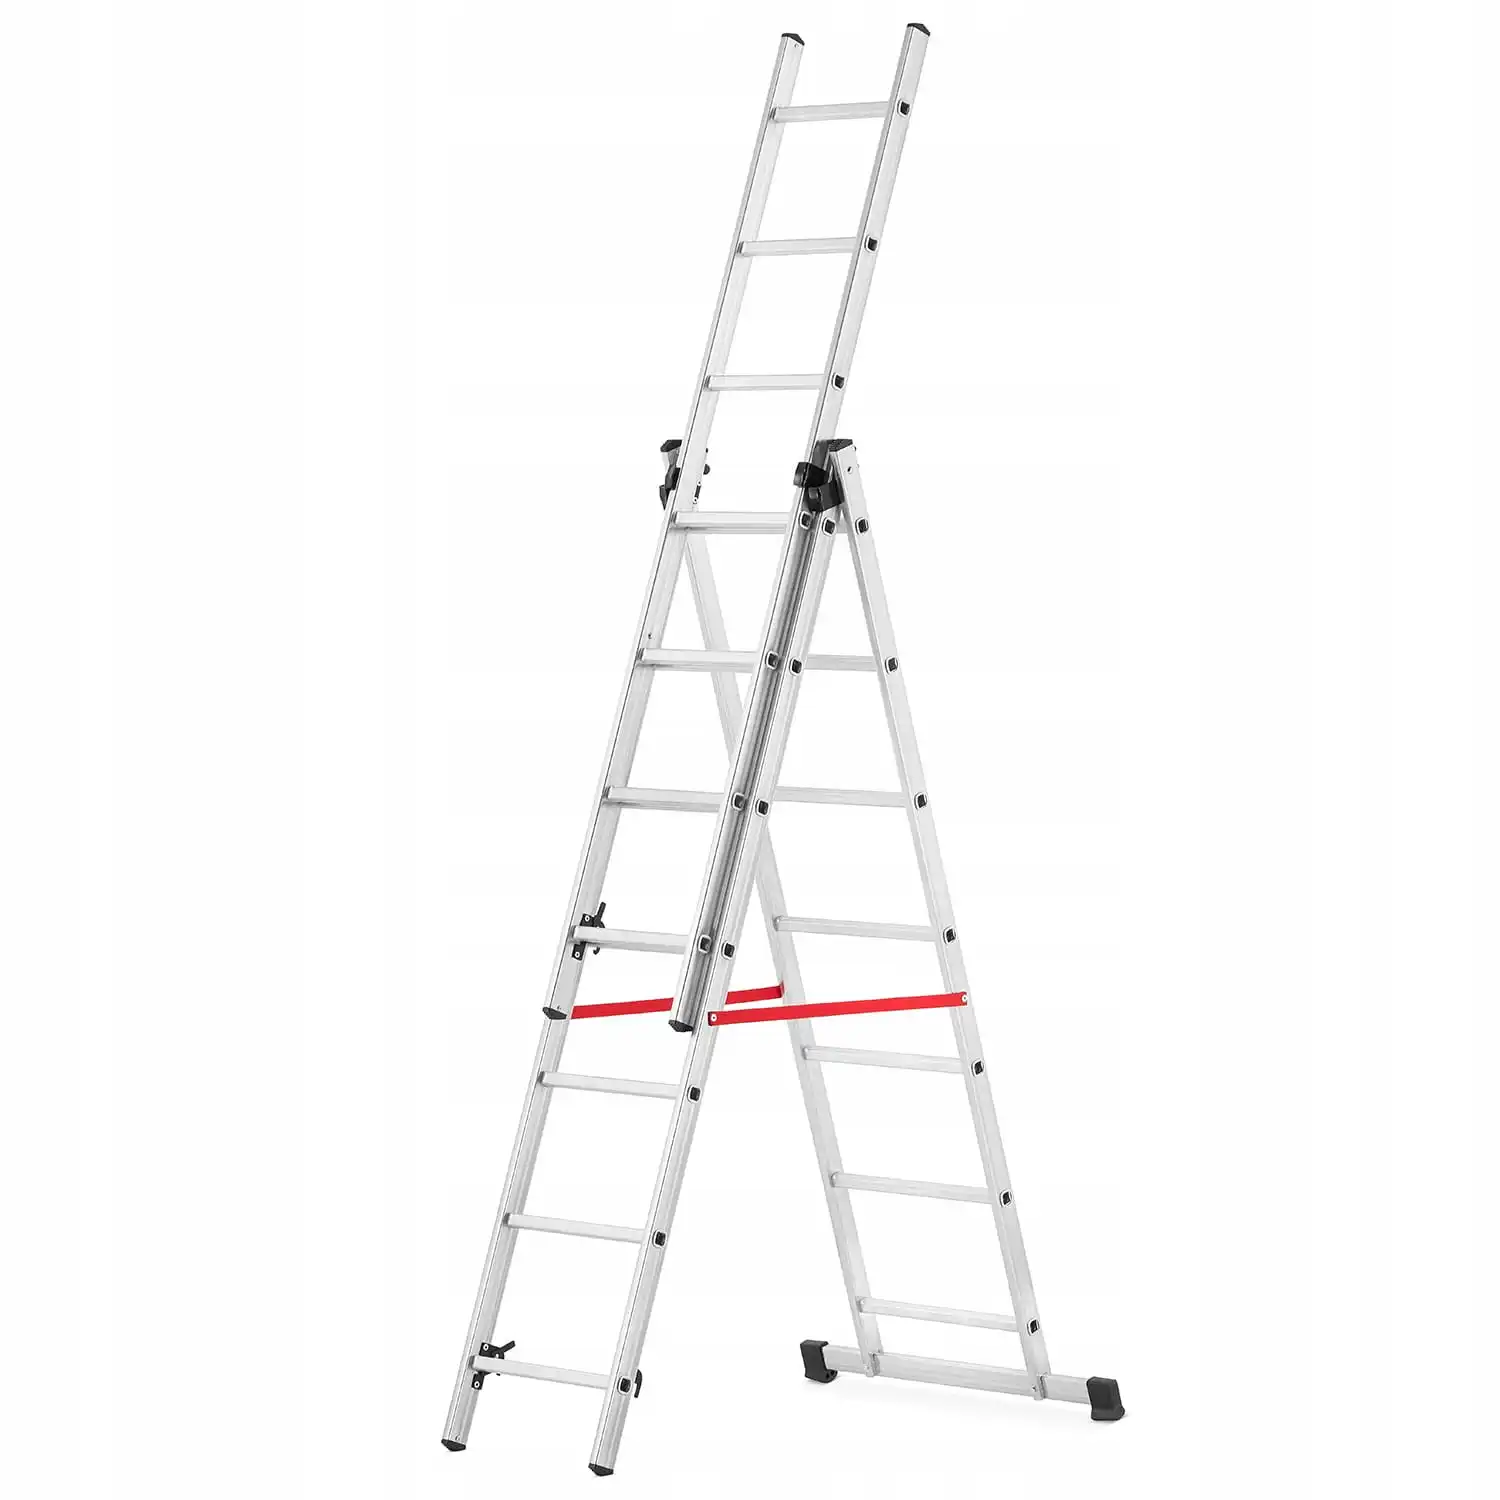 Instituut ventilatie Europa Ladder 3 Section Aluminum 3x7 Higher | Aluminium Industrial Telescopic  Ladder | The Longest 150 Kg Higher Monika - Buy Lader Ladder Telescopic  Extension Ladders 3 Section,3x7 3-7 3*7 3 Section 7